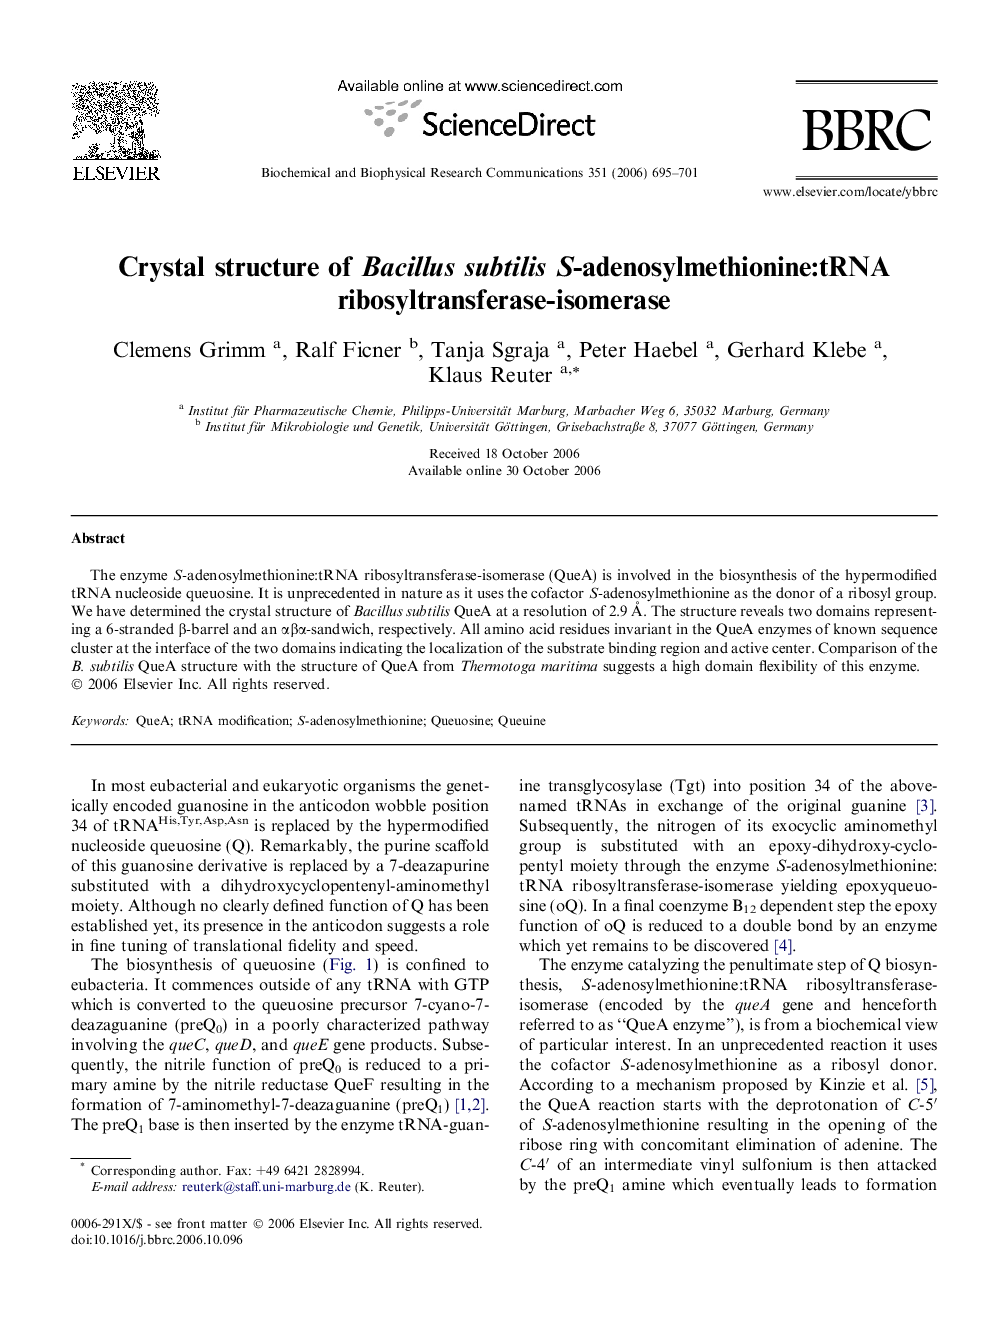 Crystal structure of Bacillus subtilis S-adenosylmethionine:tRNA ribosyltransferase-isomerase